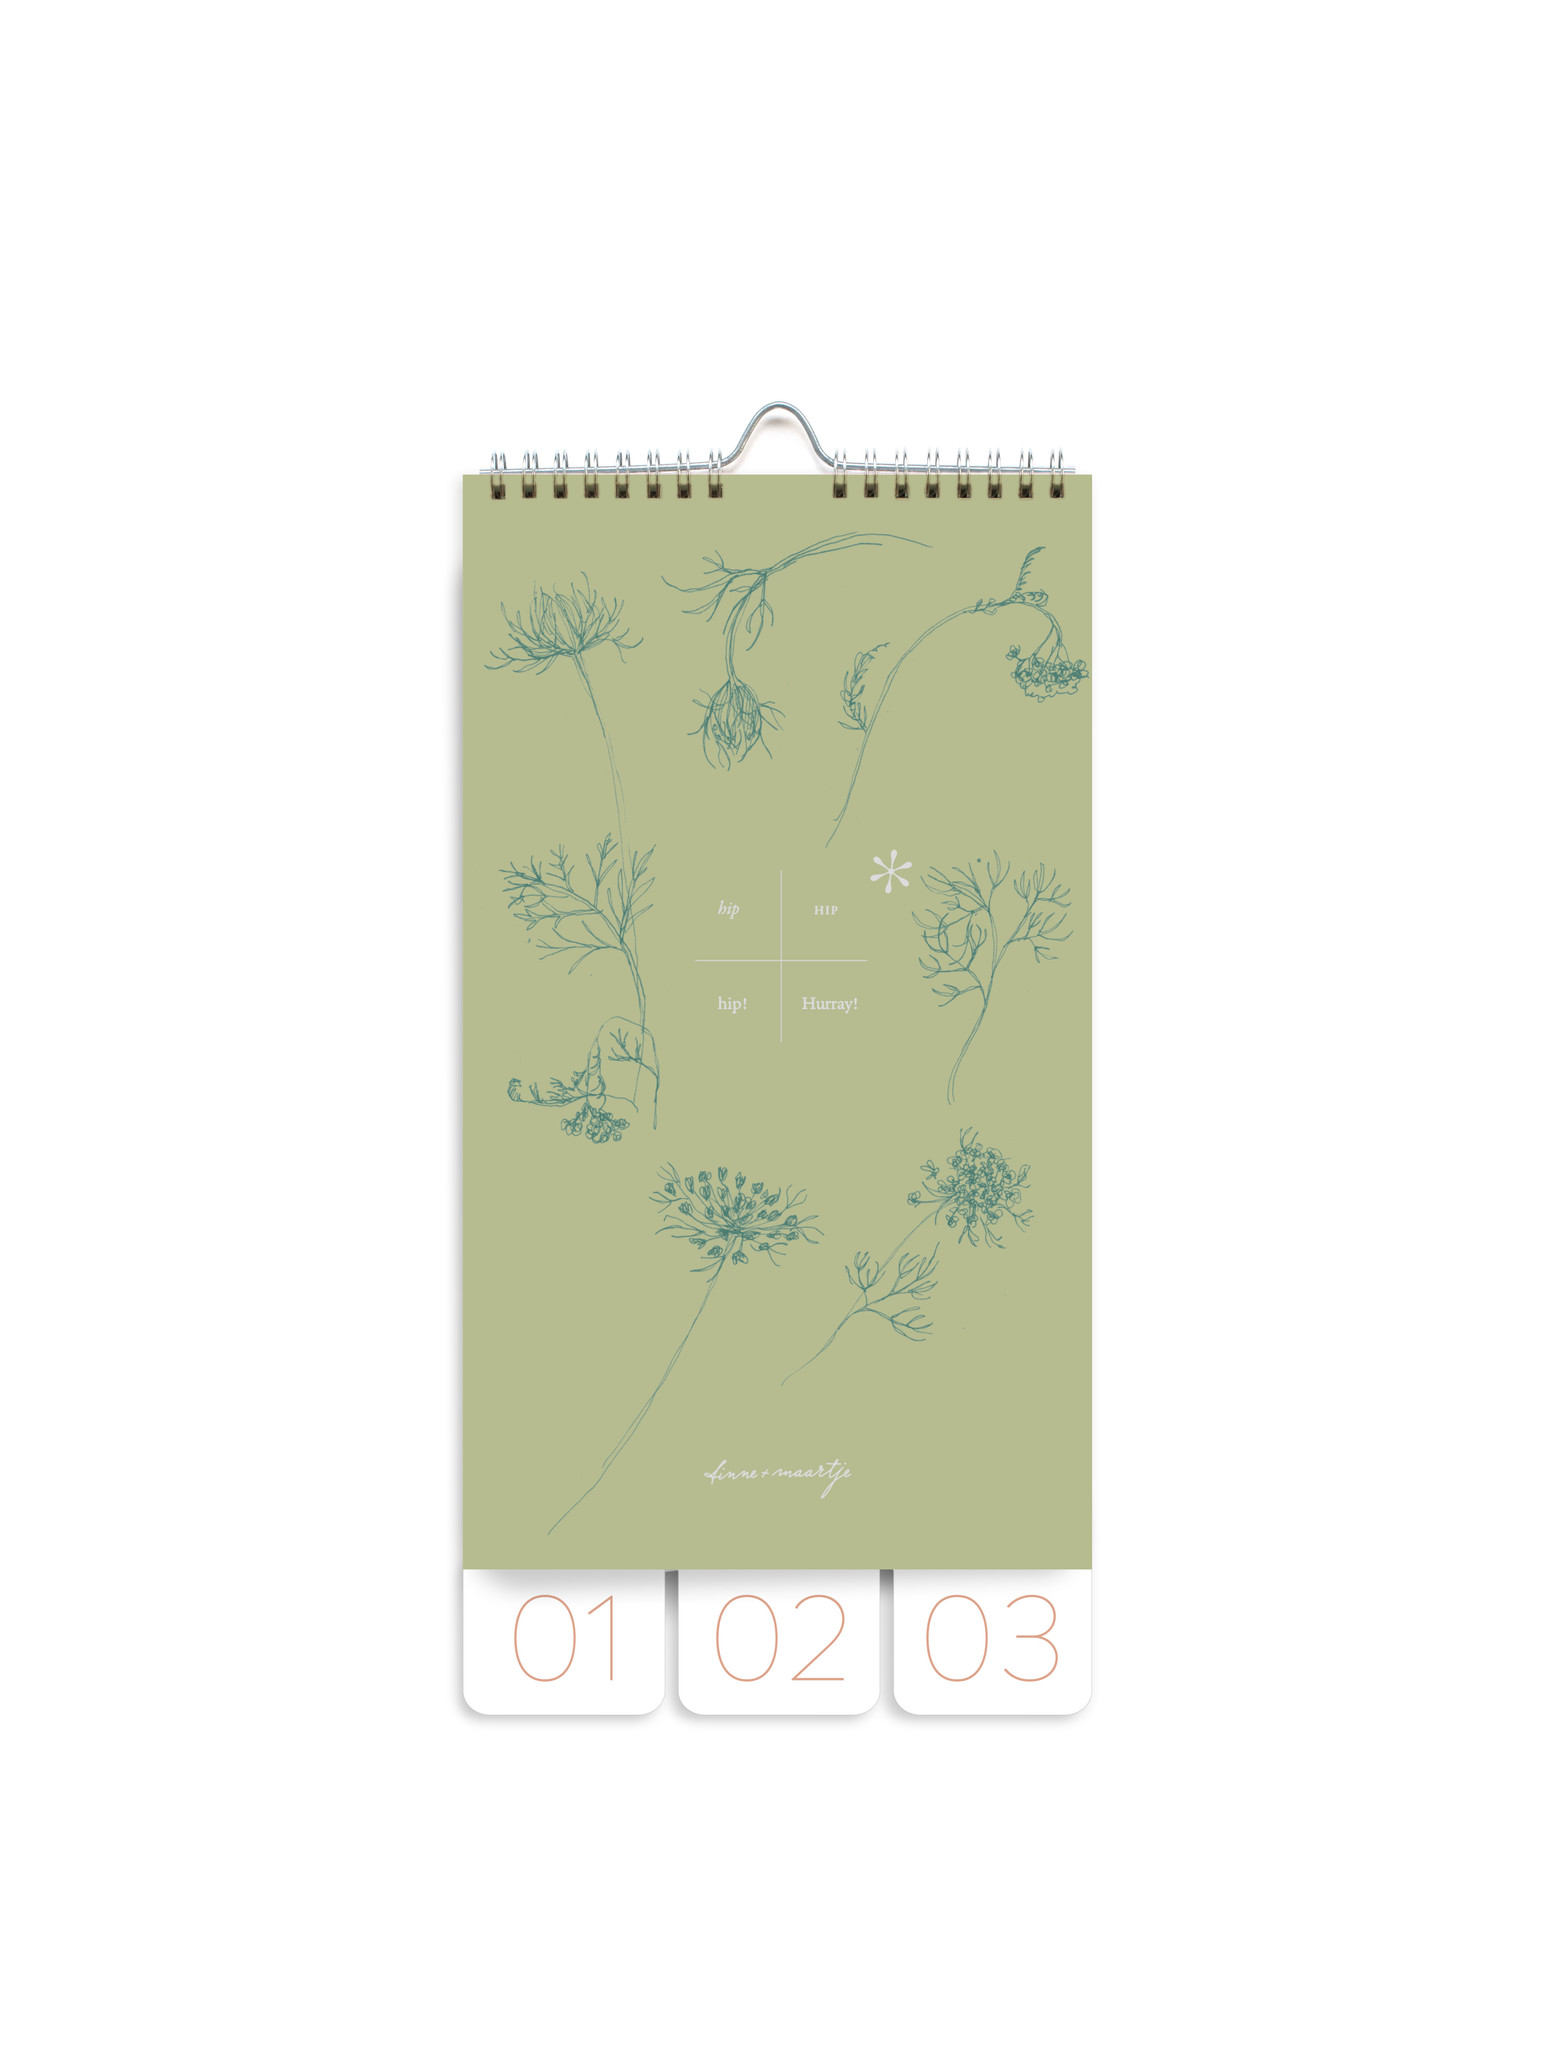 Oxide Muf capsule Verjaardags kalender - Graphic Botanique - tinne-mia.nl